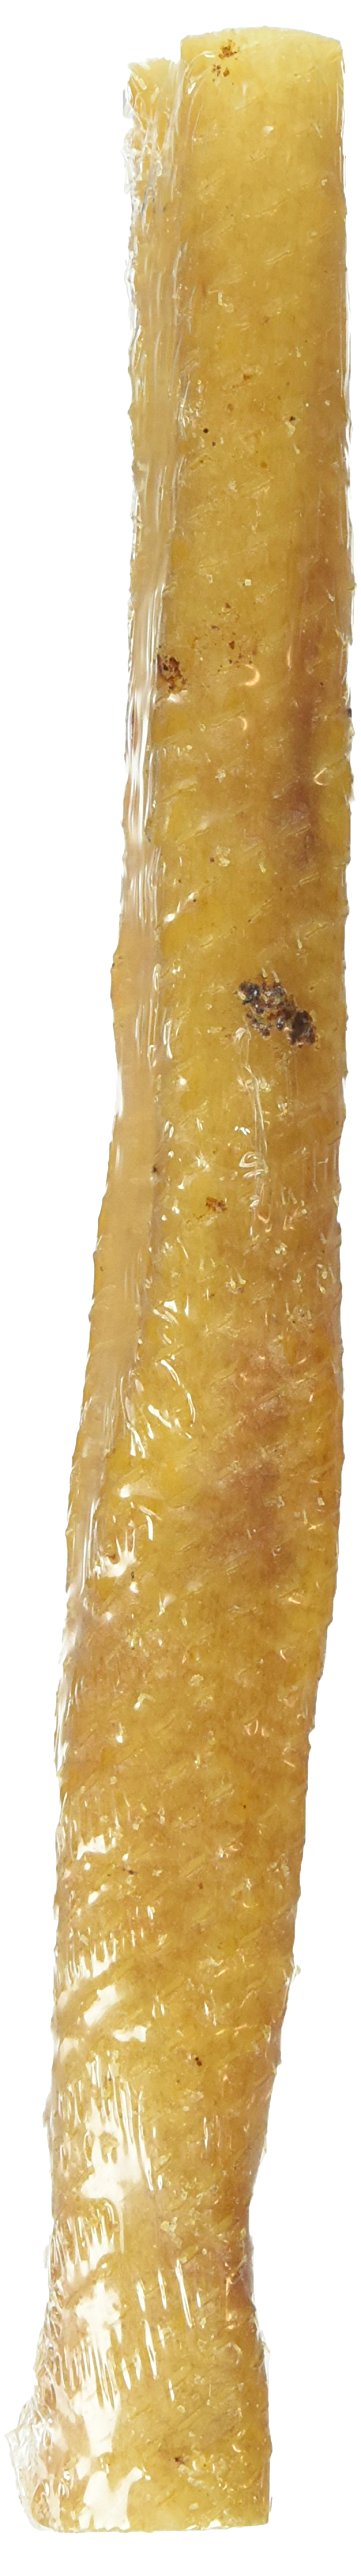 Jones Natural Chews 10in K9 Bacon Roll Shrink-wrap